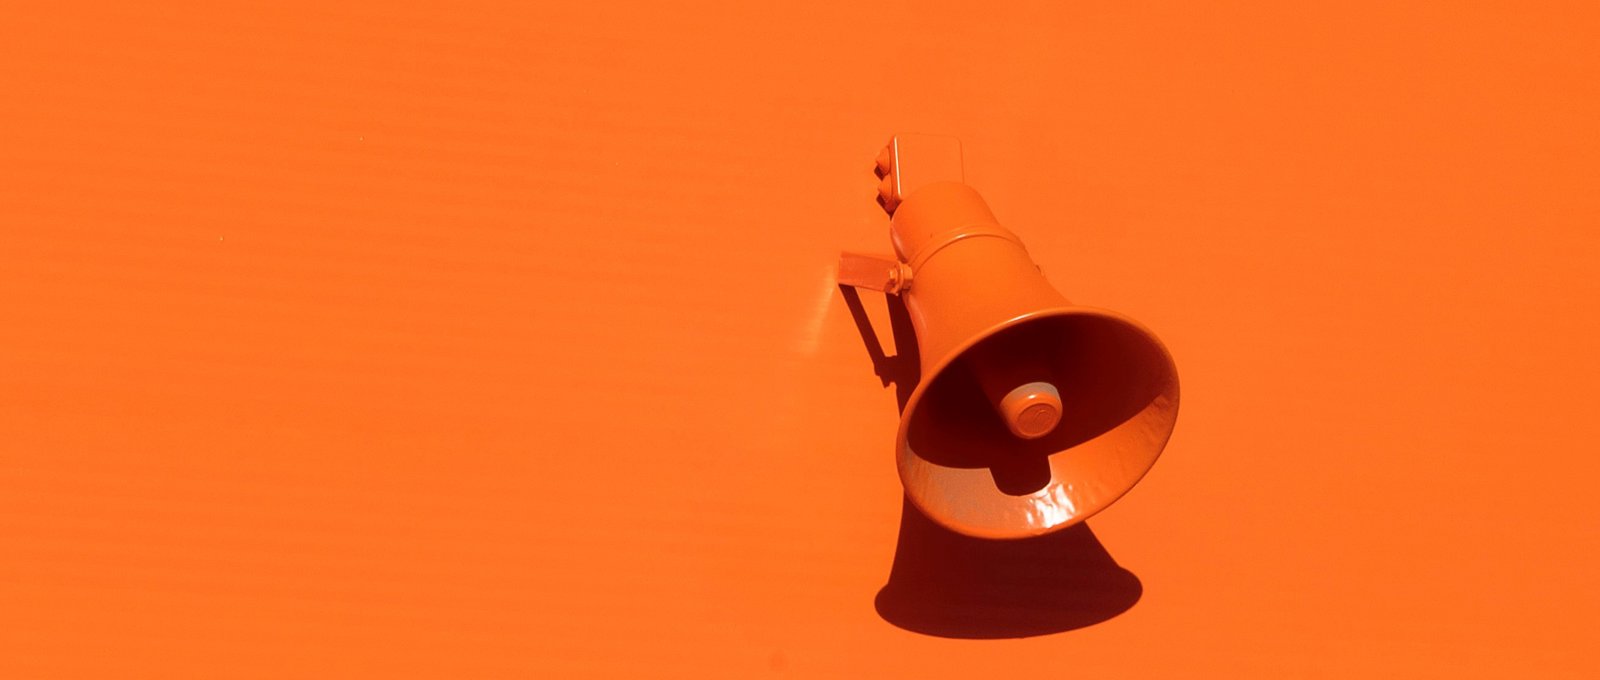 A bright orange megaphone on an orange background